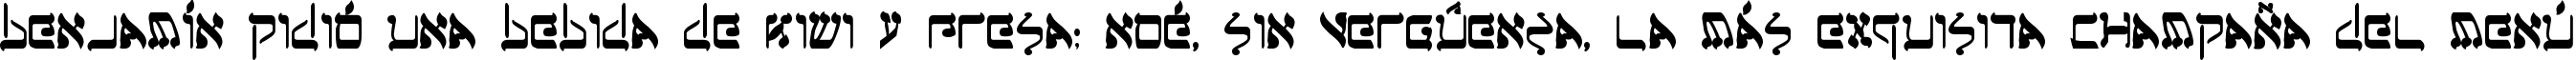 Пример написания шрифтом Jerusalem Bold текста на испанском